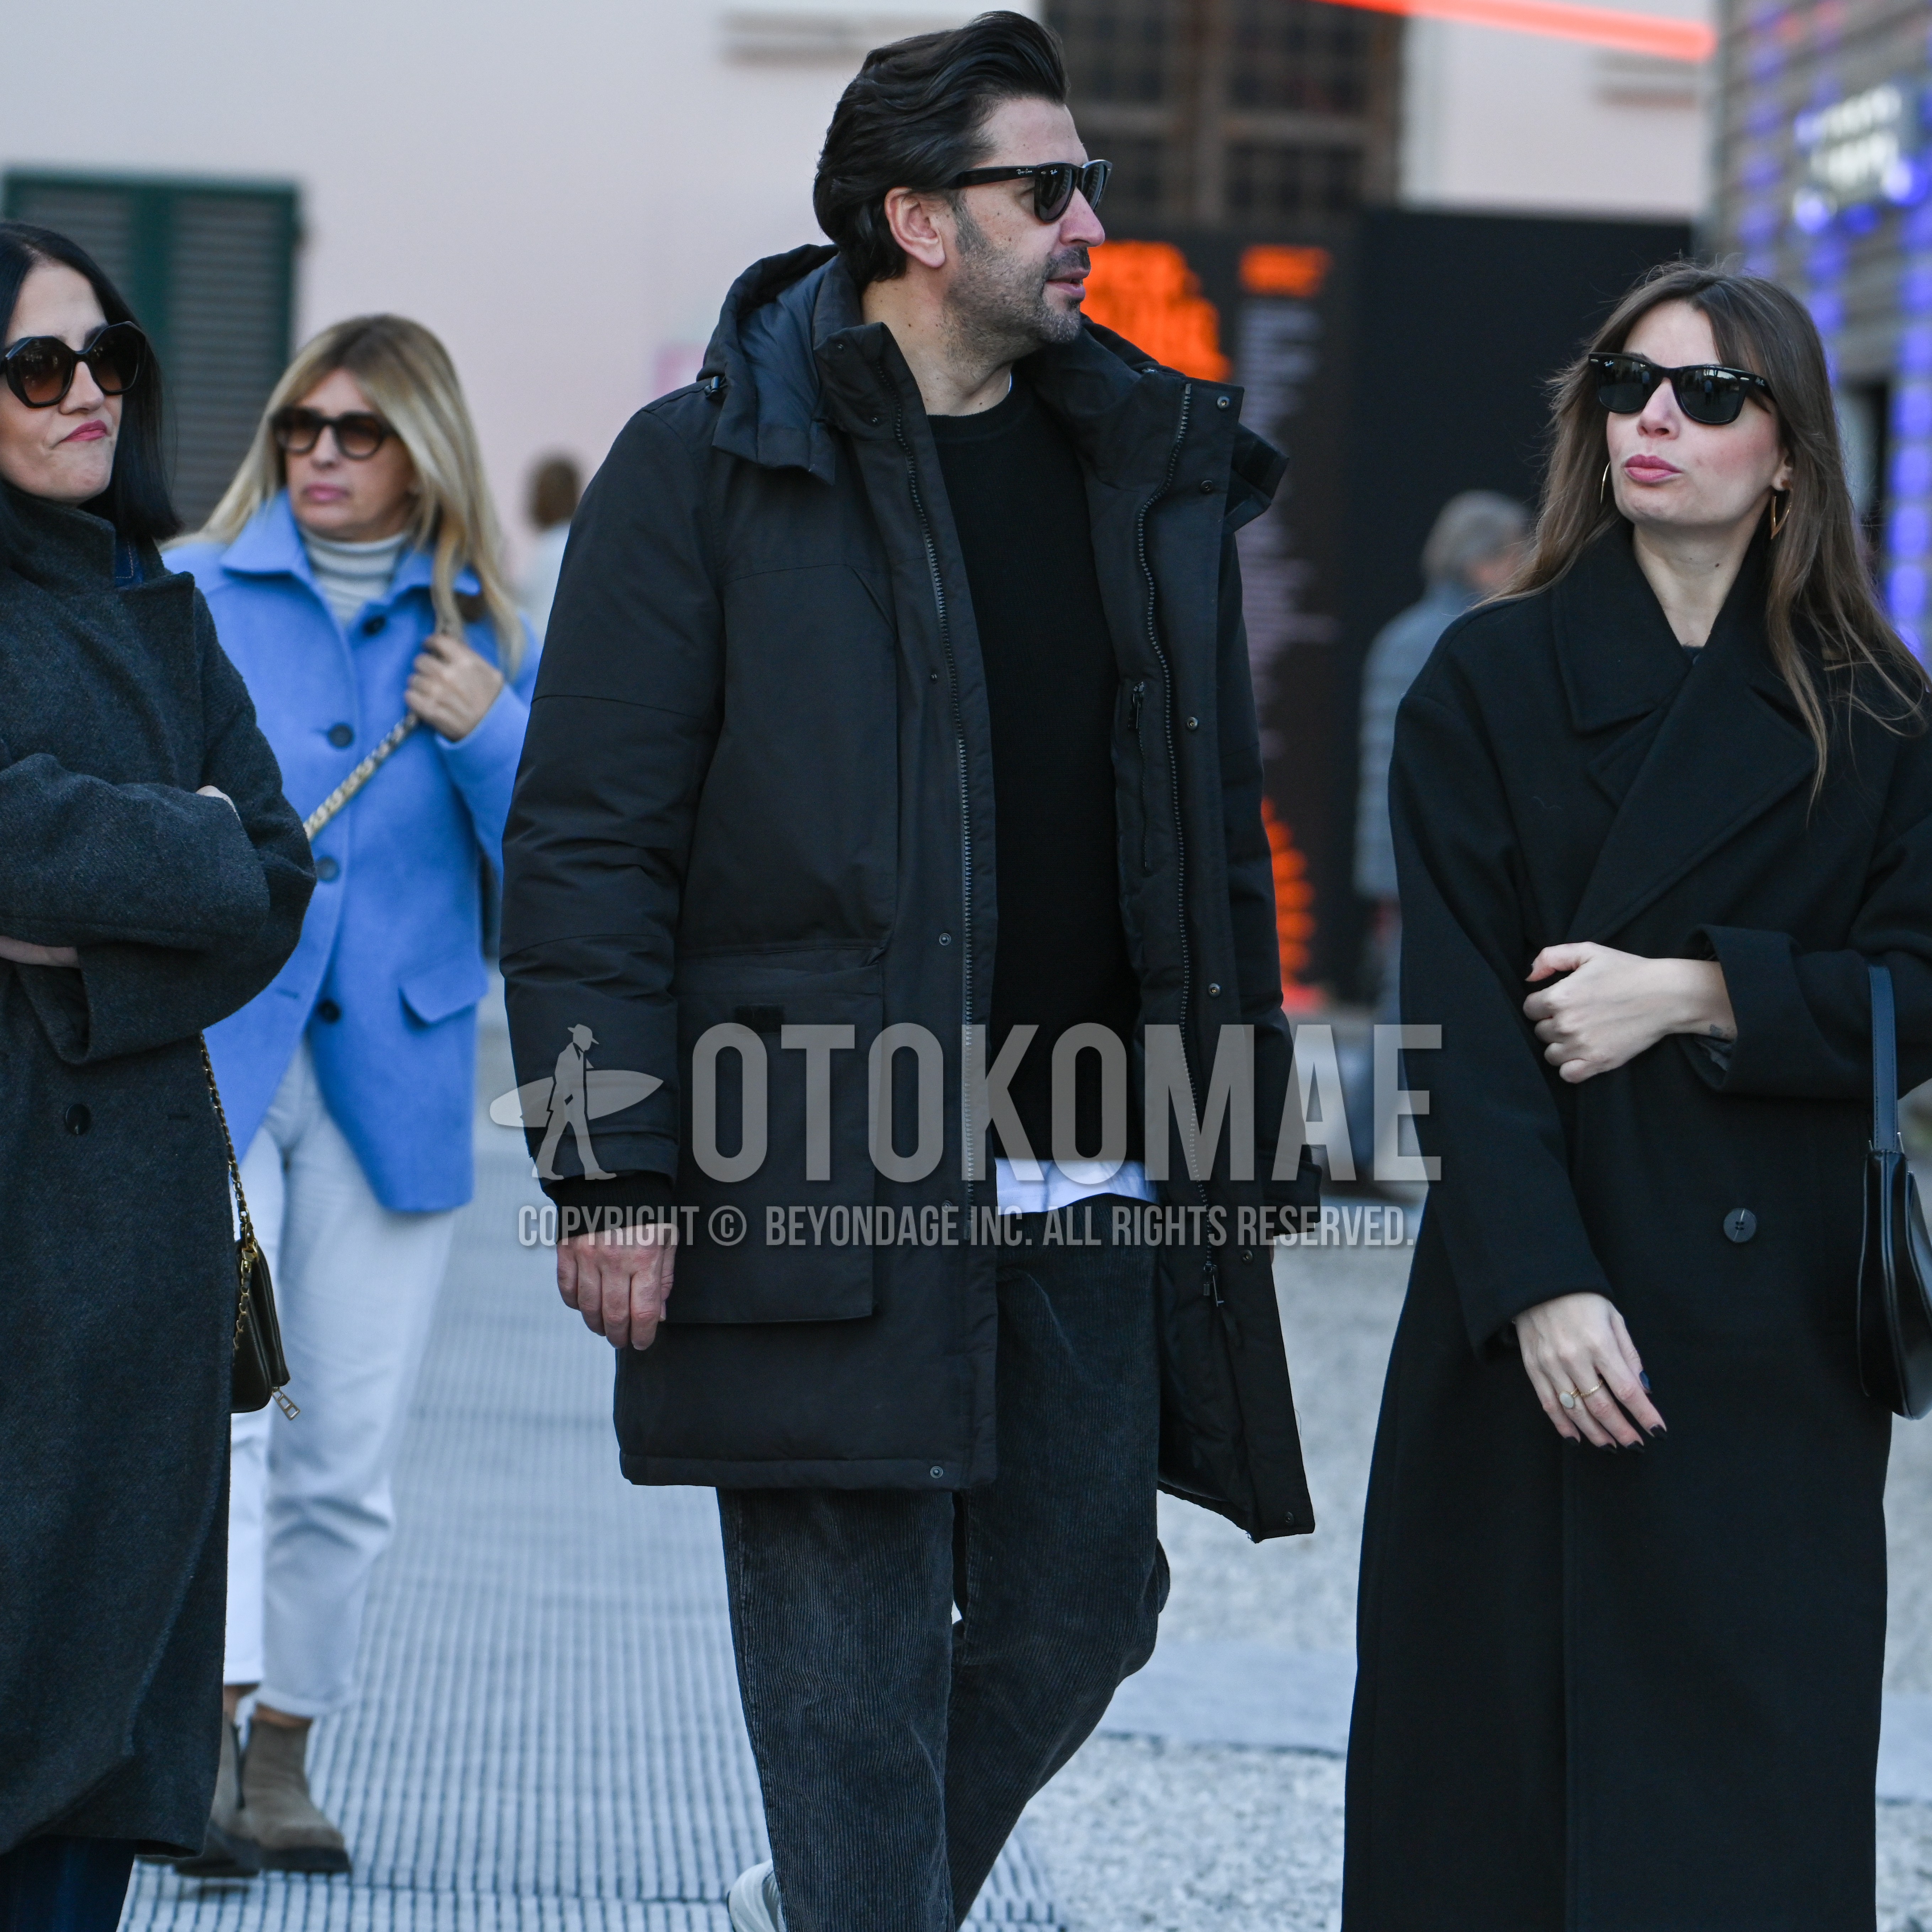 Men's autumn winter outfit with black plain sunglasses, black plain hooded coat, black plain sweater, white plain long sleeve t-shirt, dark gray plain winter pants (corduroy,velour).